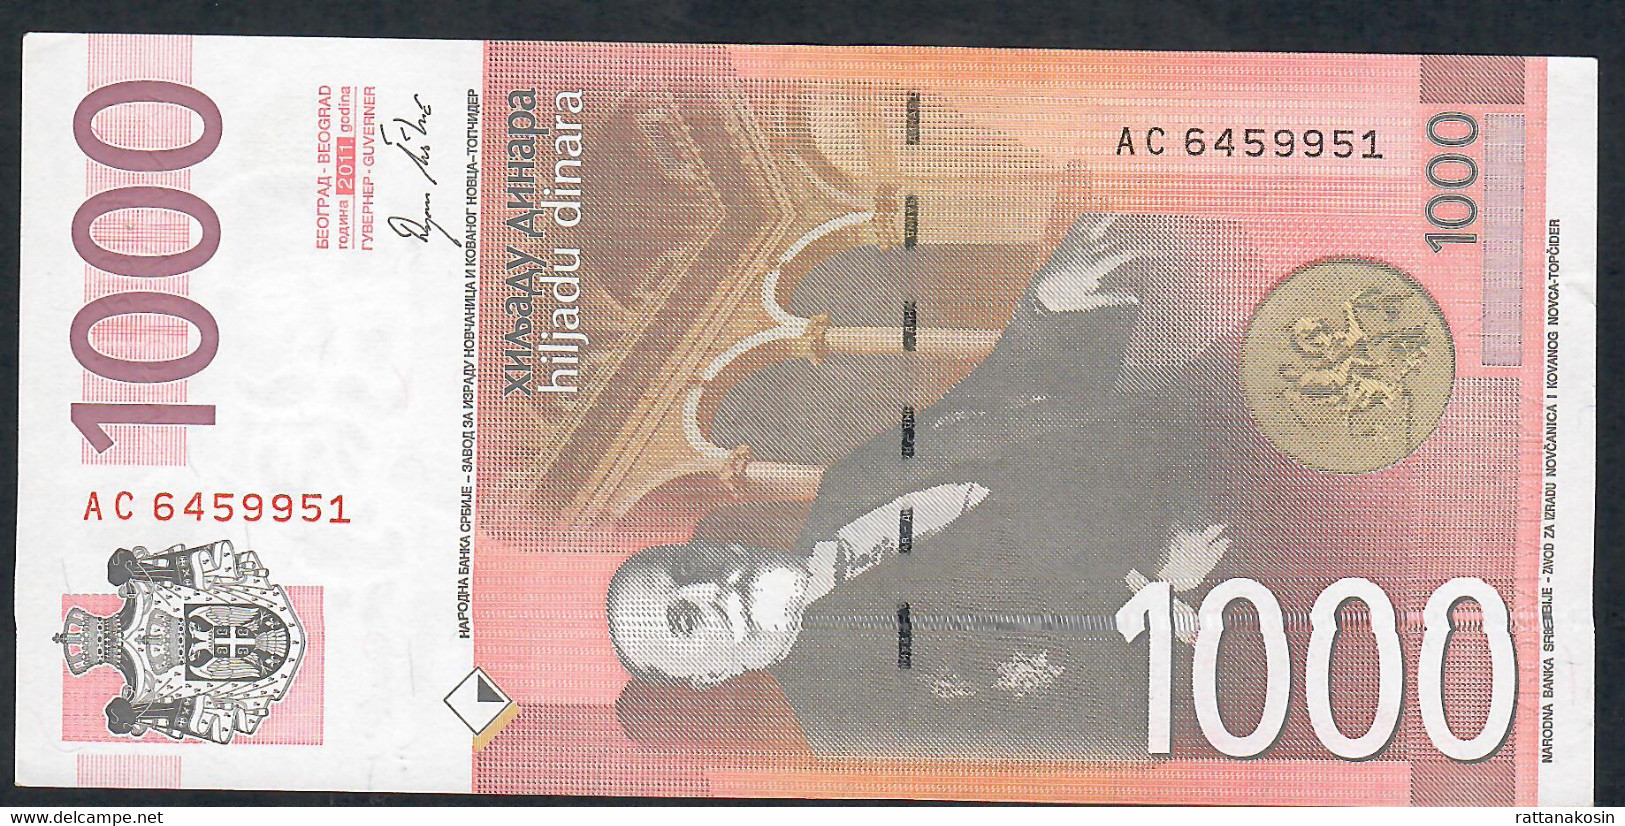 SERBIA  P60a   1000   DINARA   2011   # AC     AU- UNC. - Servië